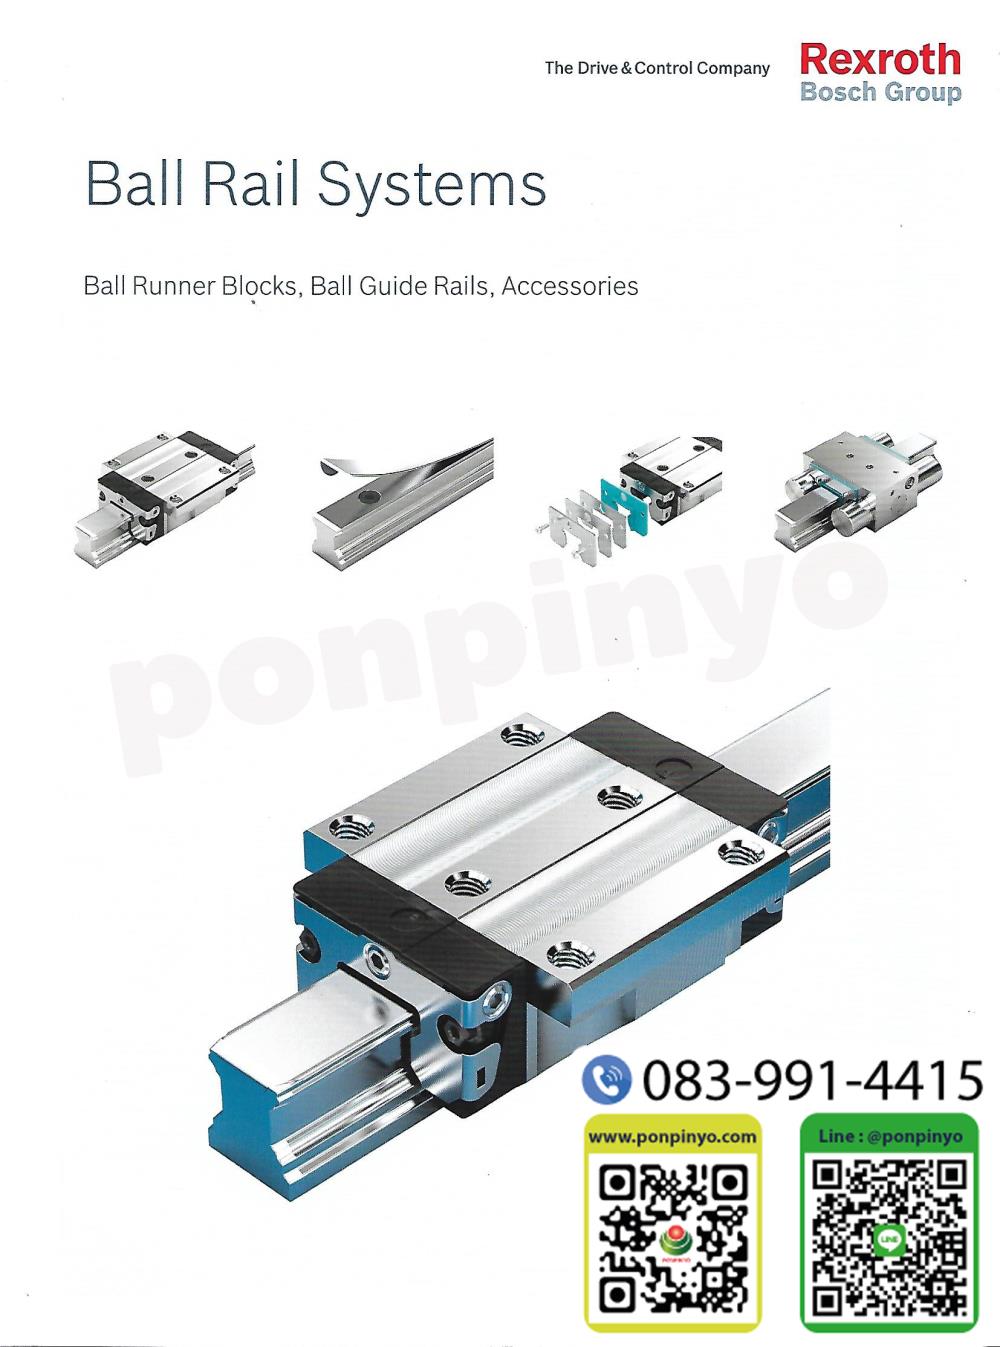 Ball Rail Systems, Ball Runner, Ball Guide Rails,Ball Rail Systems,Ball Runner,Ball Guide Rails,Rexroth,Rexroth,Machinery and Process Equipment/Bearings/Linear